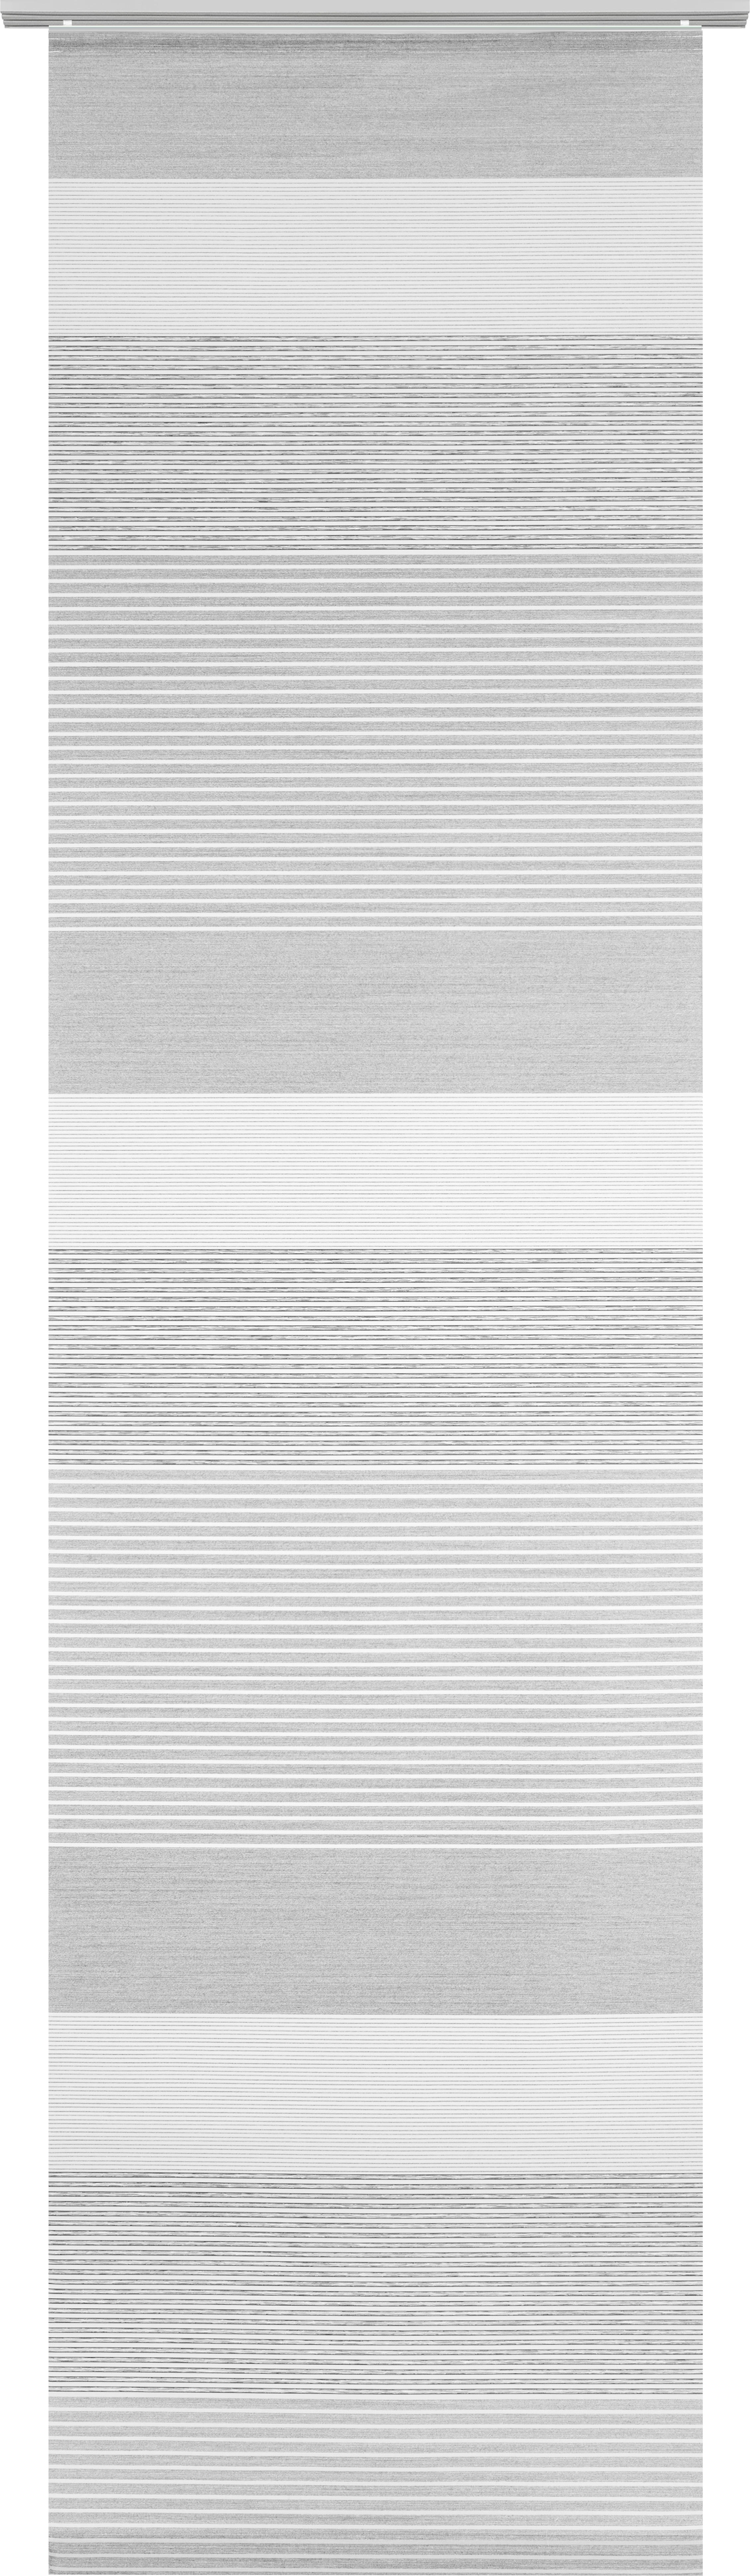 FLÄCHENVORHANG   halbtransparent  60/245 cm   - Anthrazit, Basics, Textil (60/245cm) - Novel